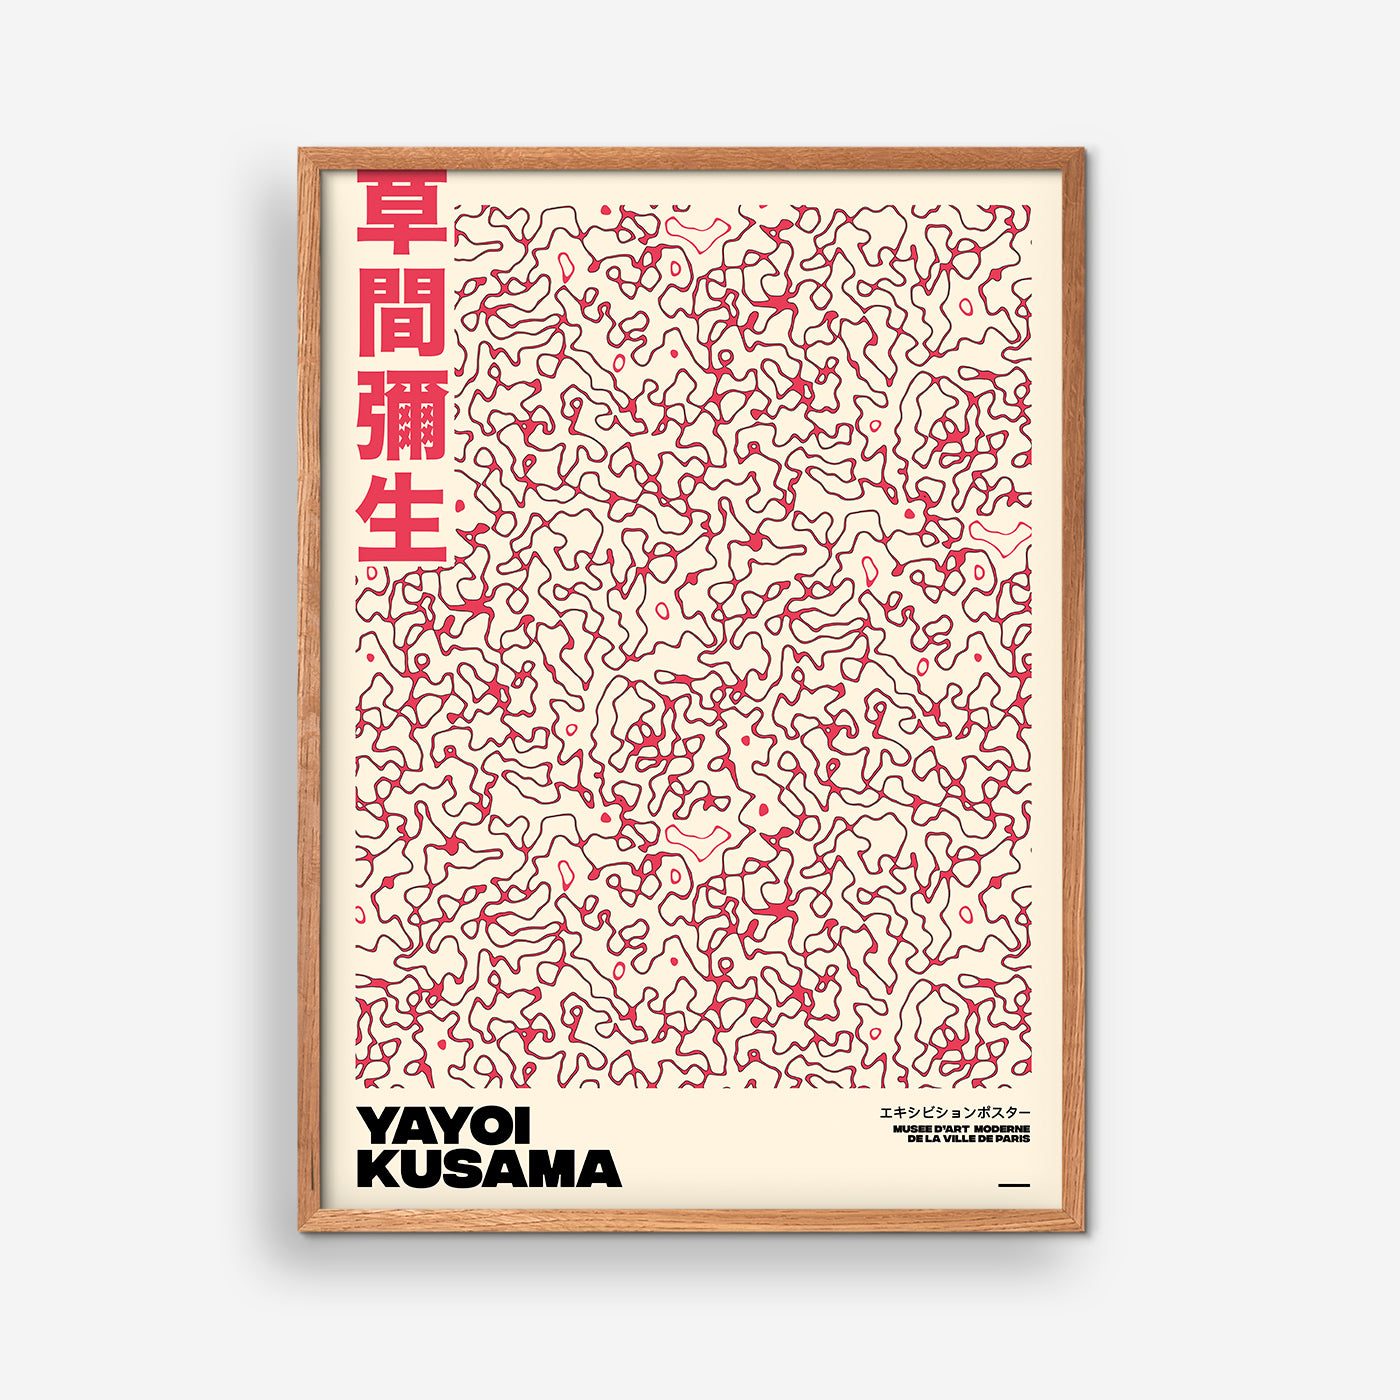 Exhibition poster Modern - Yayoi Kusama